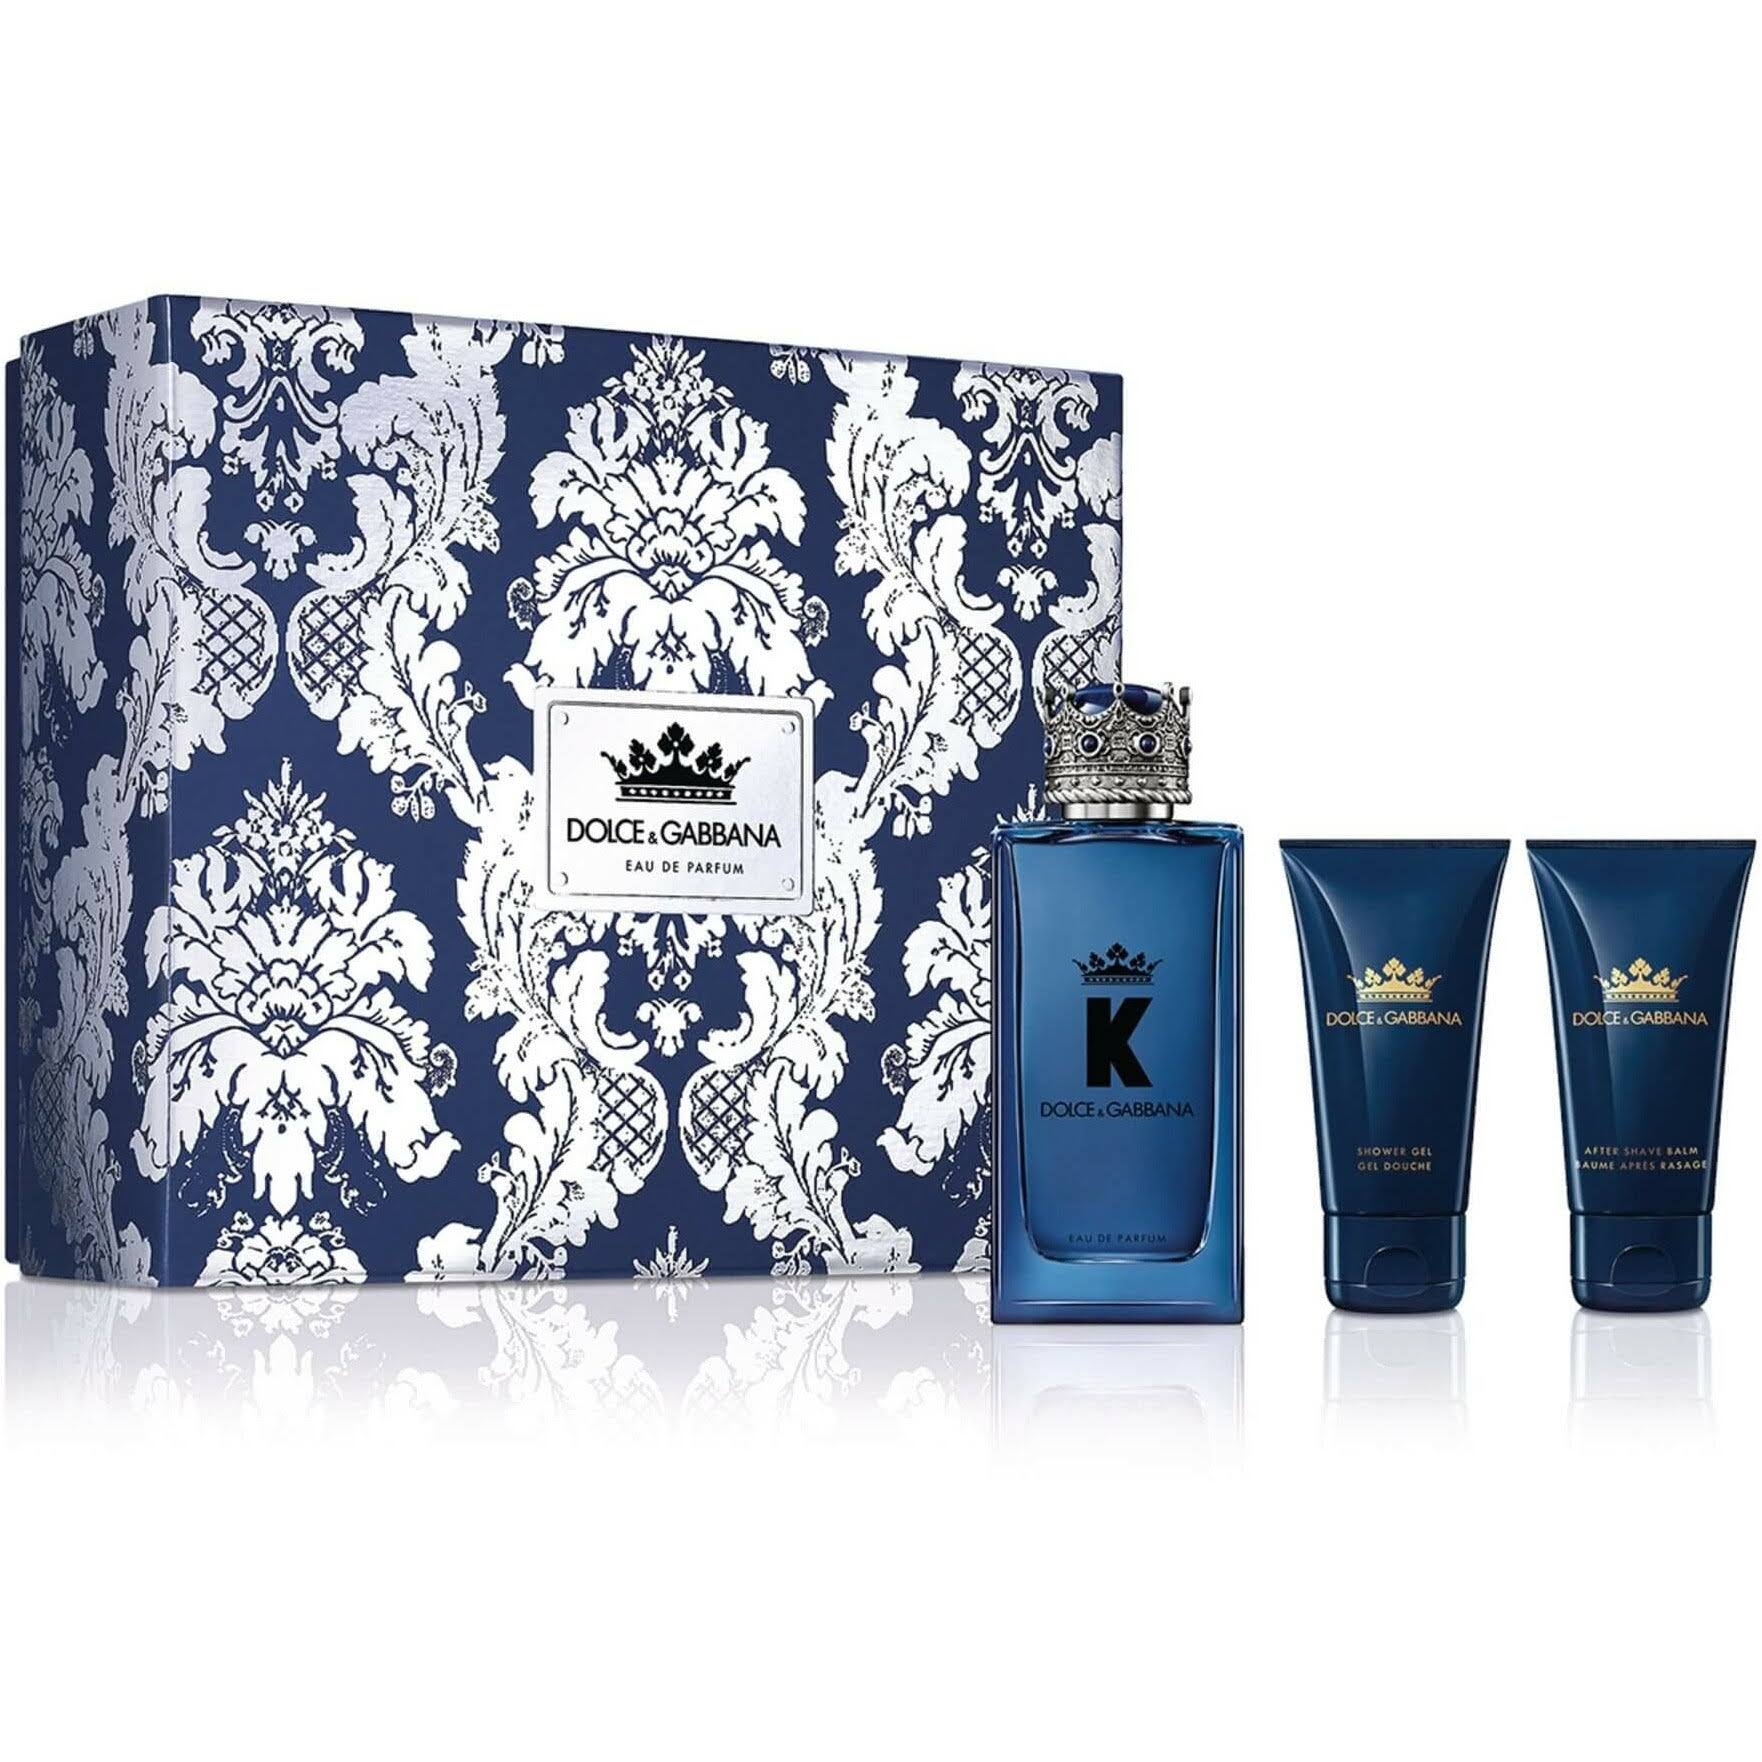 K by Dolce & Gabbana Gift Set 100ml